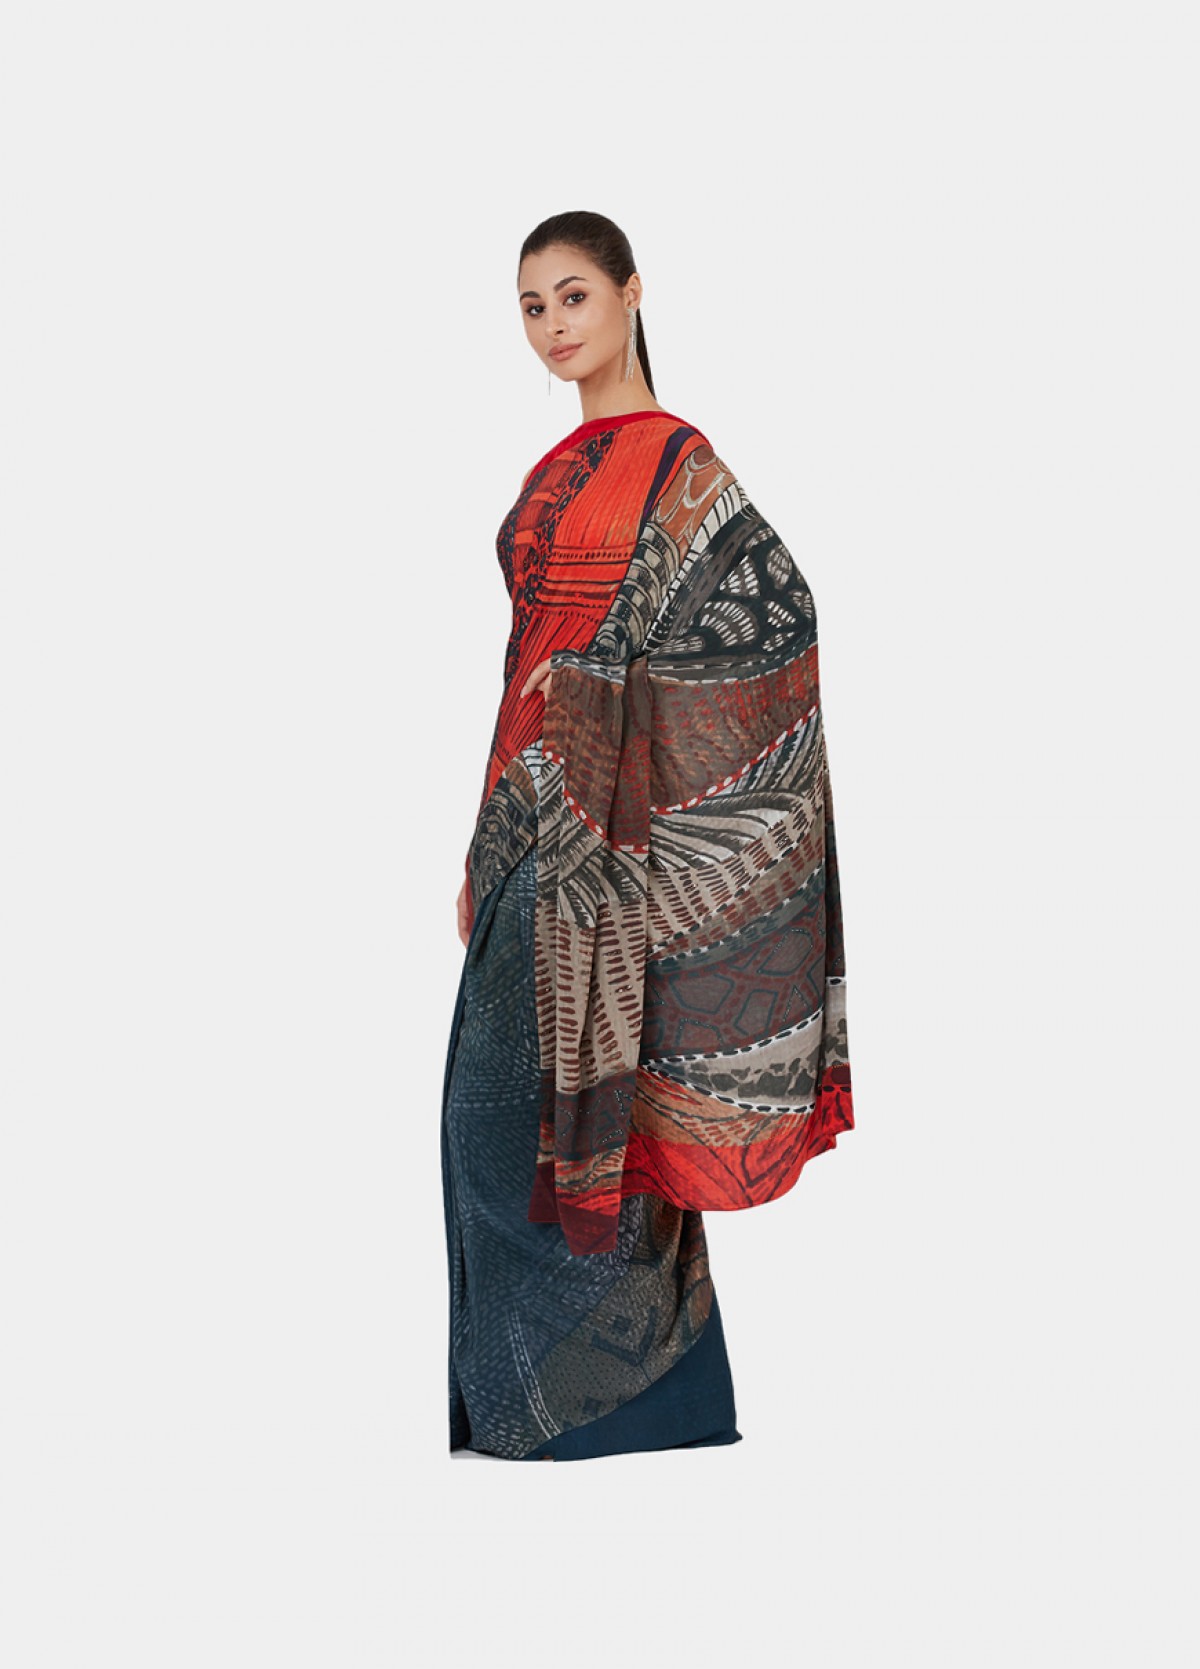 The Gond Sari